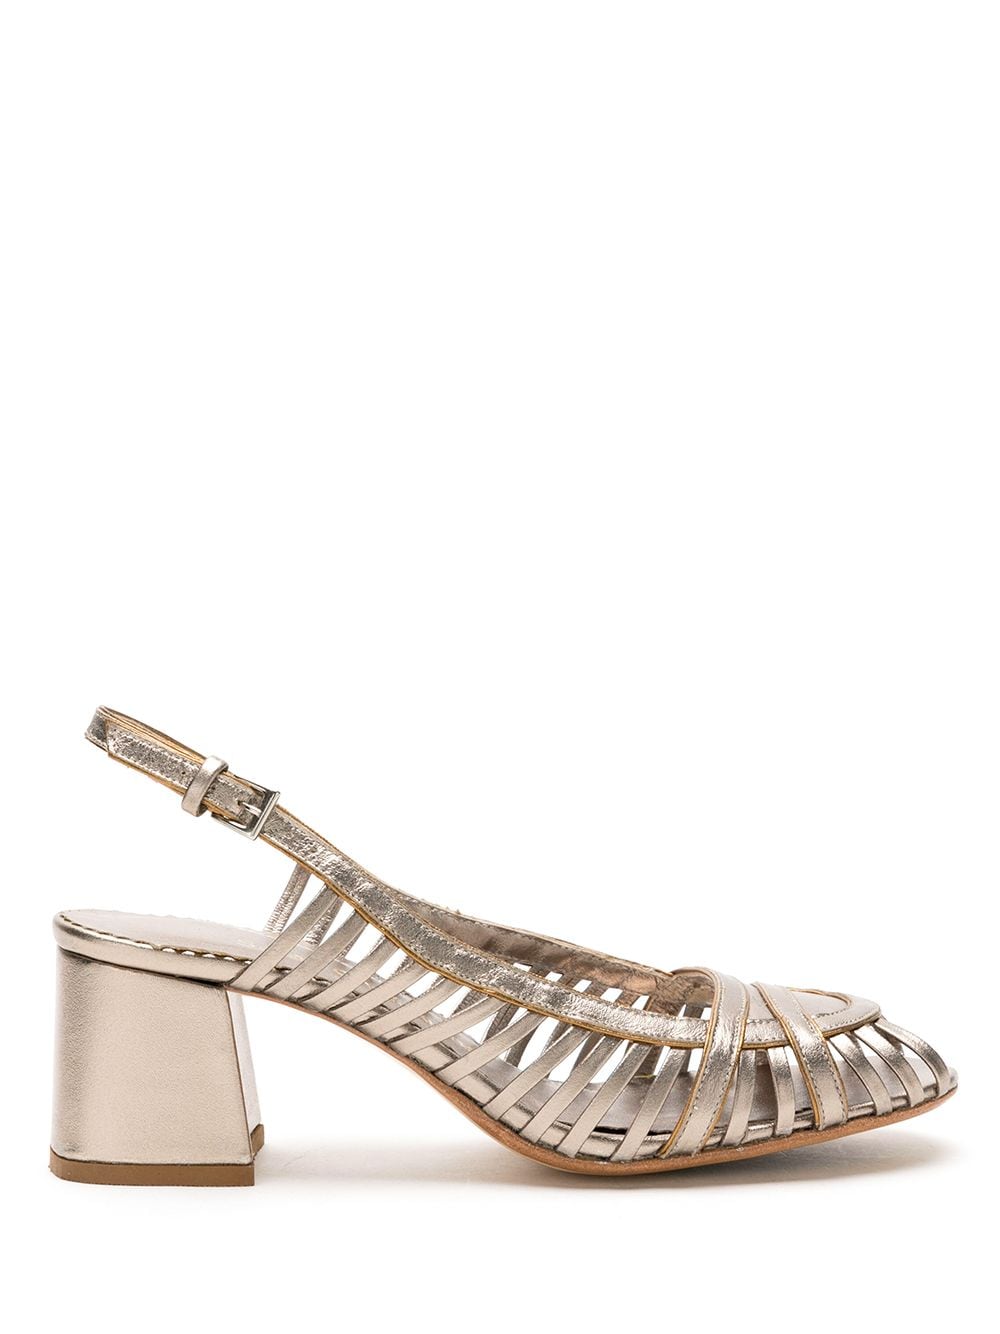 Sarah Chofakian leather Jezz sandals - Gold von Sarah Chofakian